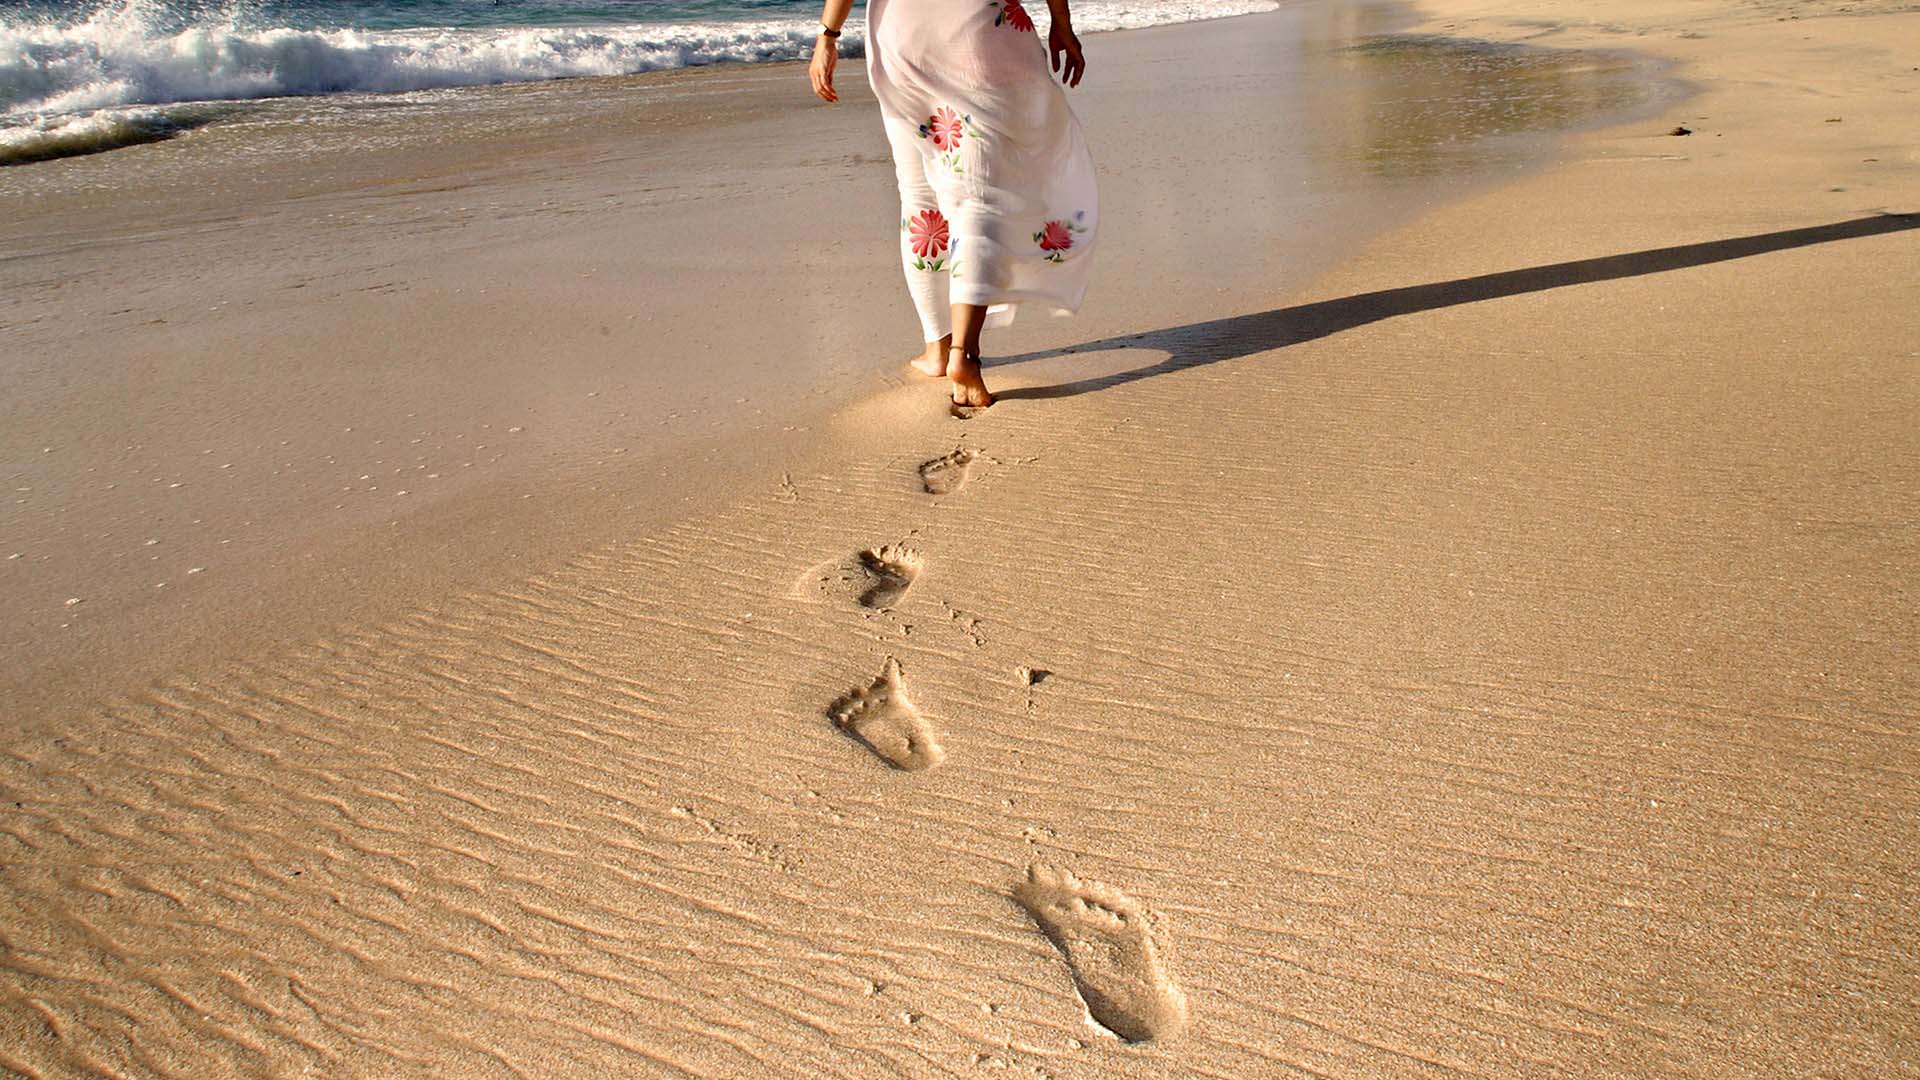 Free photo: Footprints in sand, sand, footprint